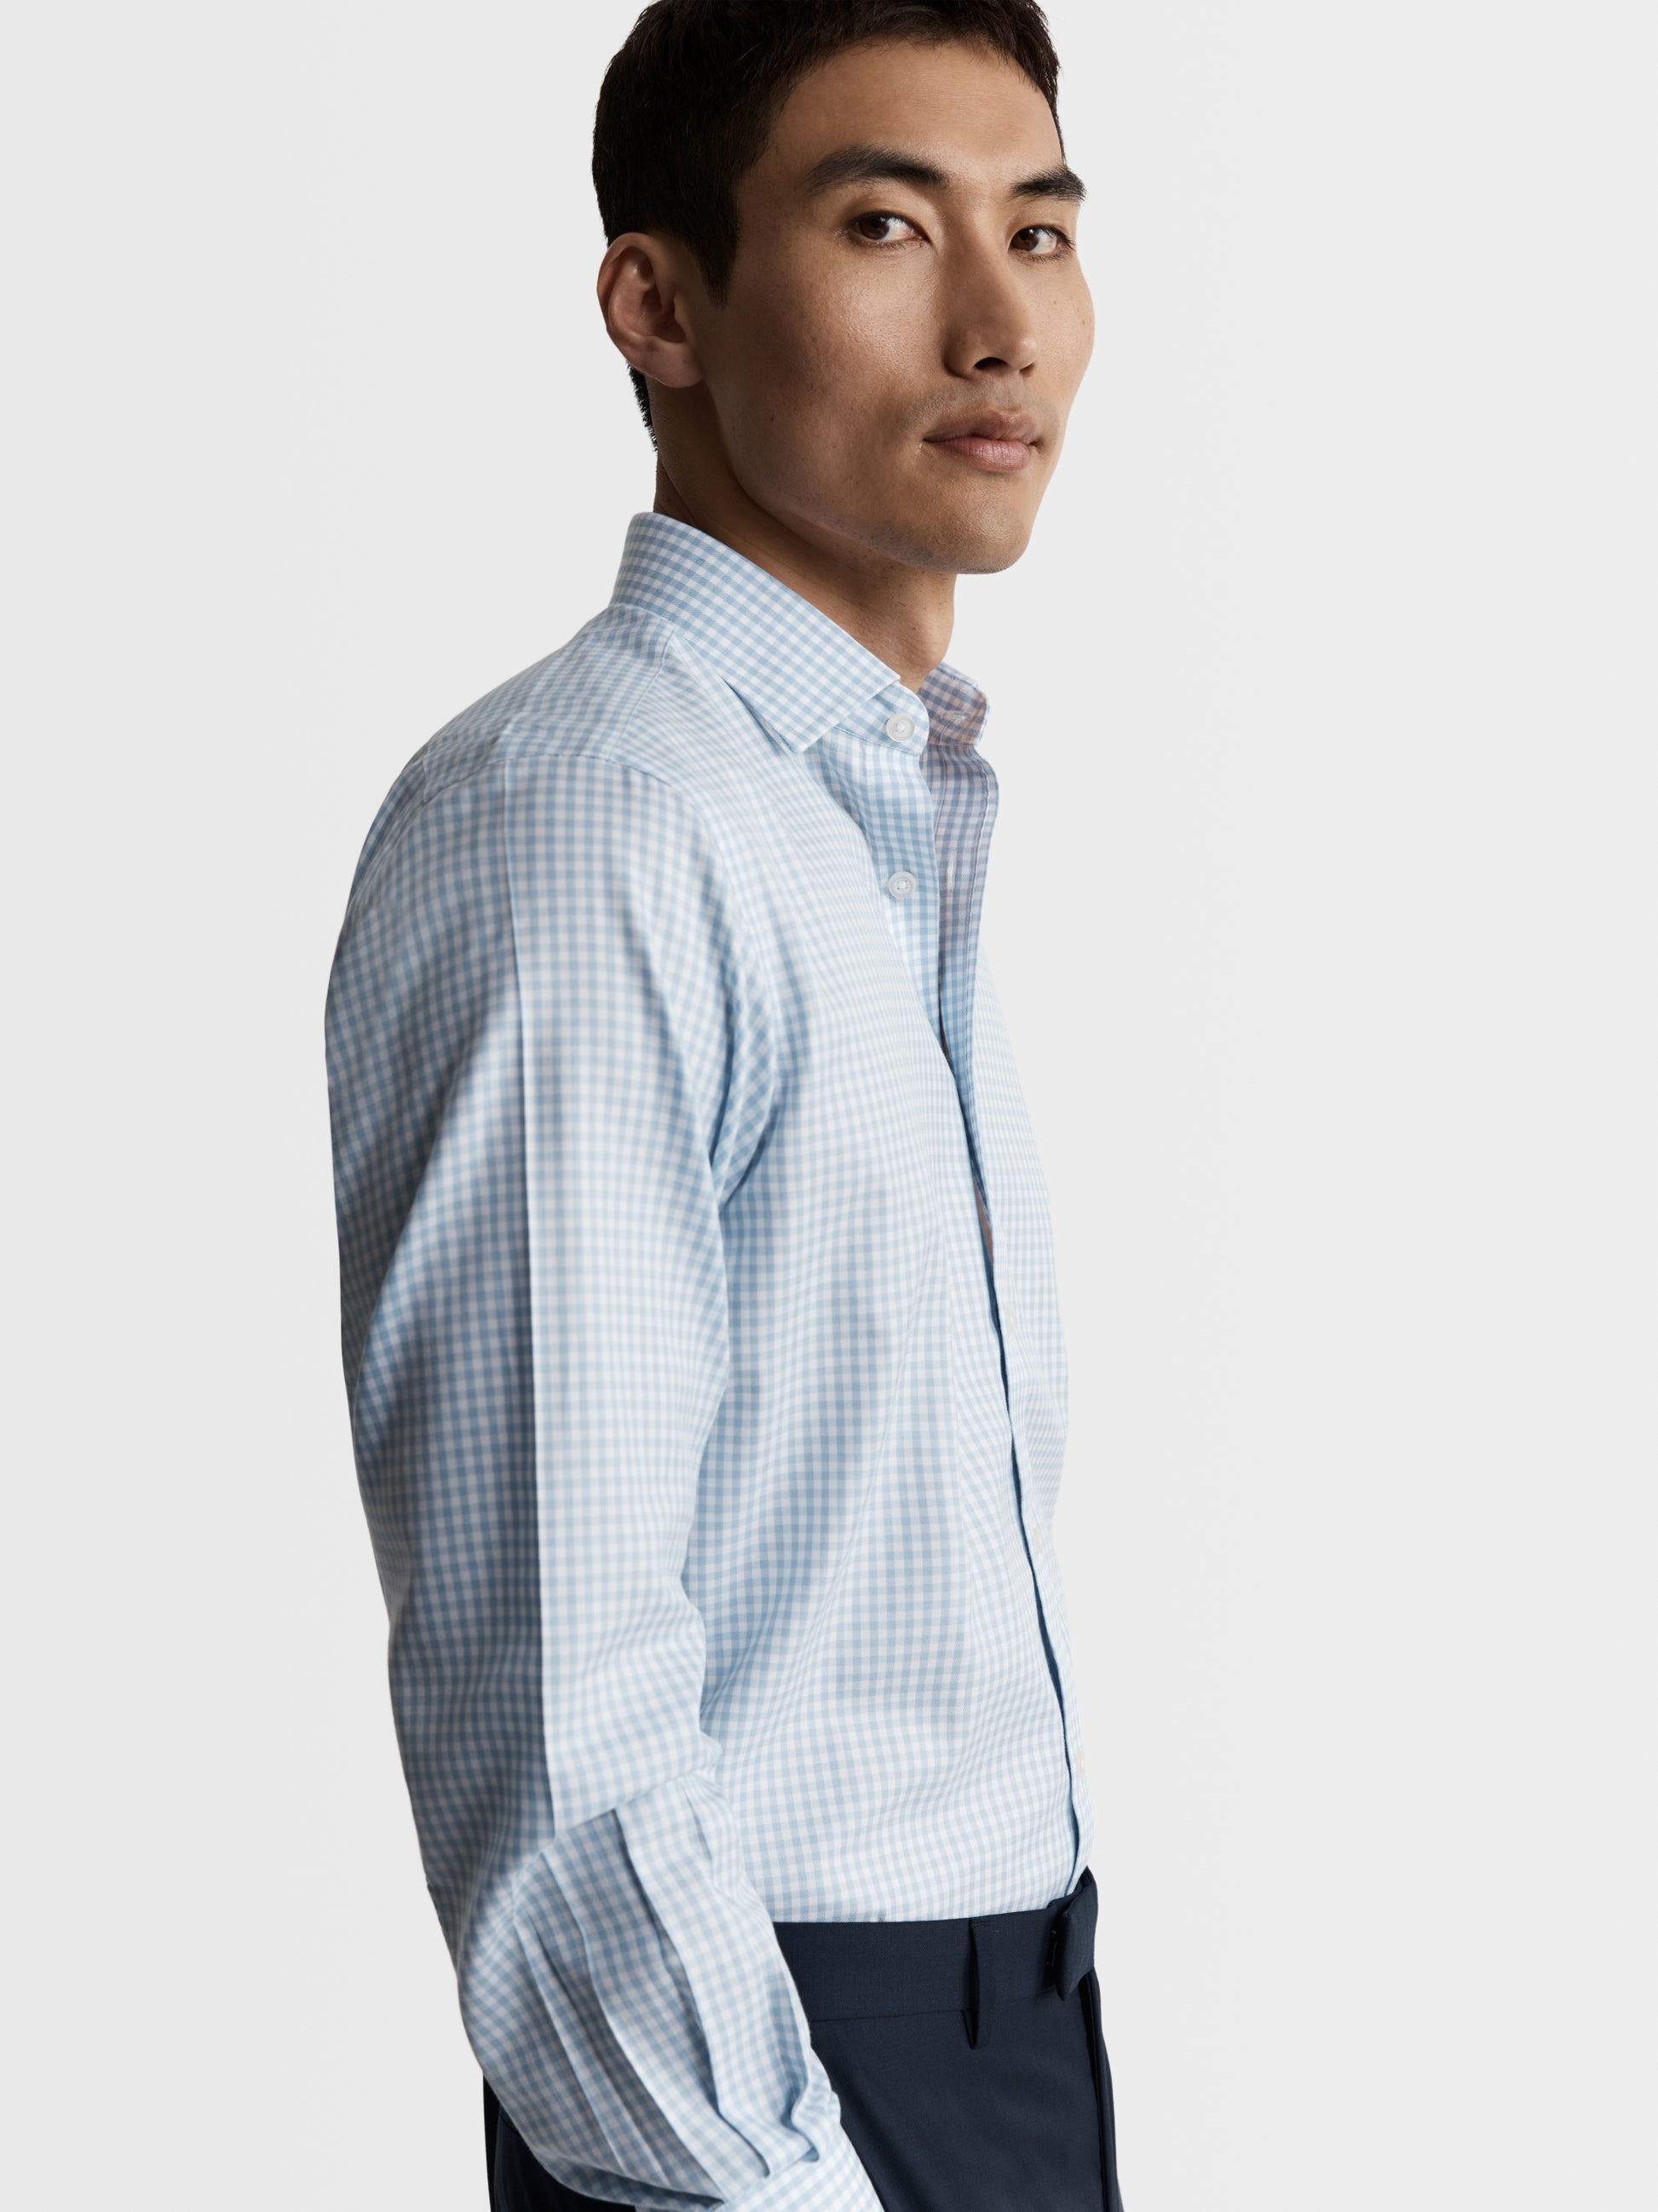 Image 2 of Non-Iron Light Blue Gingham Twill Regular Fit Single Cuff Classic Collar Shirt